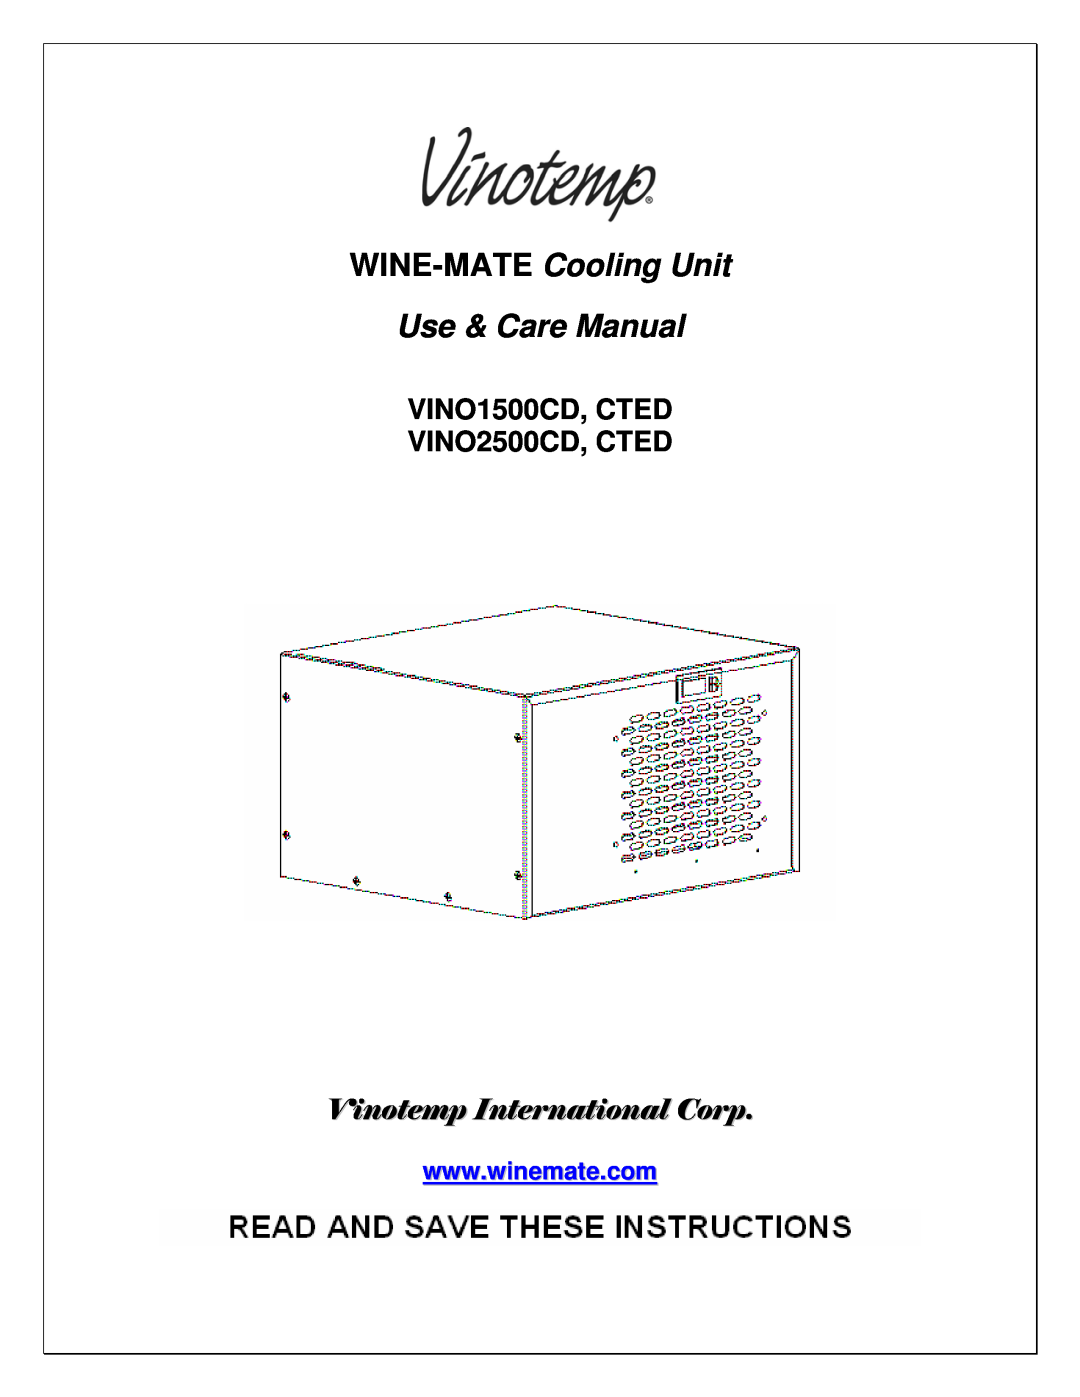 Vinotemp WM-2500CD, VINO-4500SSR manual VINO1500CD, CTED VINO2500CD, CTED, WINE-MATE Cooling Unit Use & Care Manual 